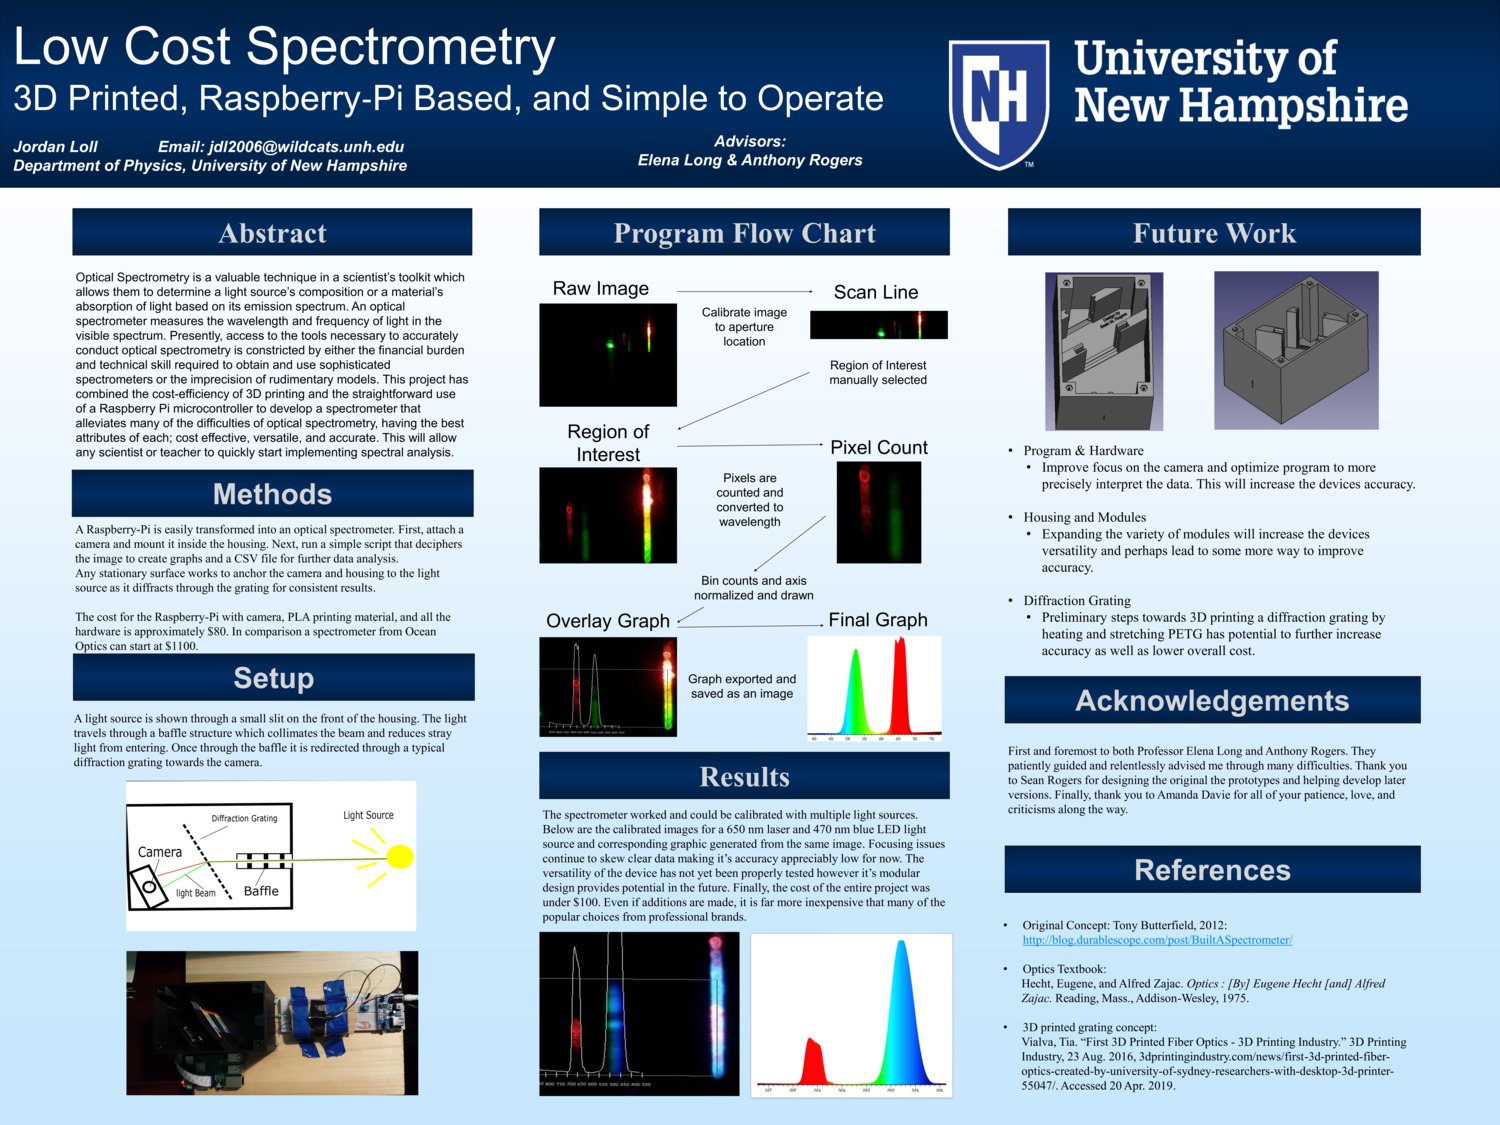 Low Cost Spectrometry by jdl2006